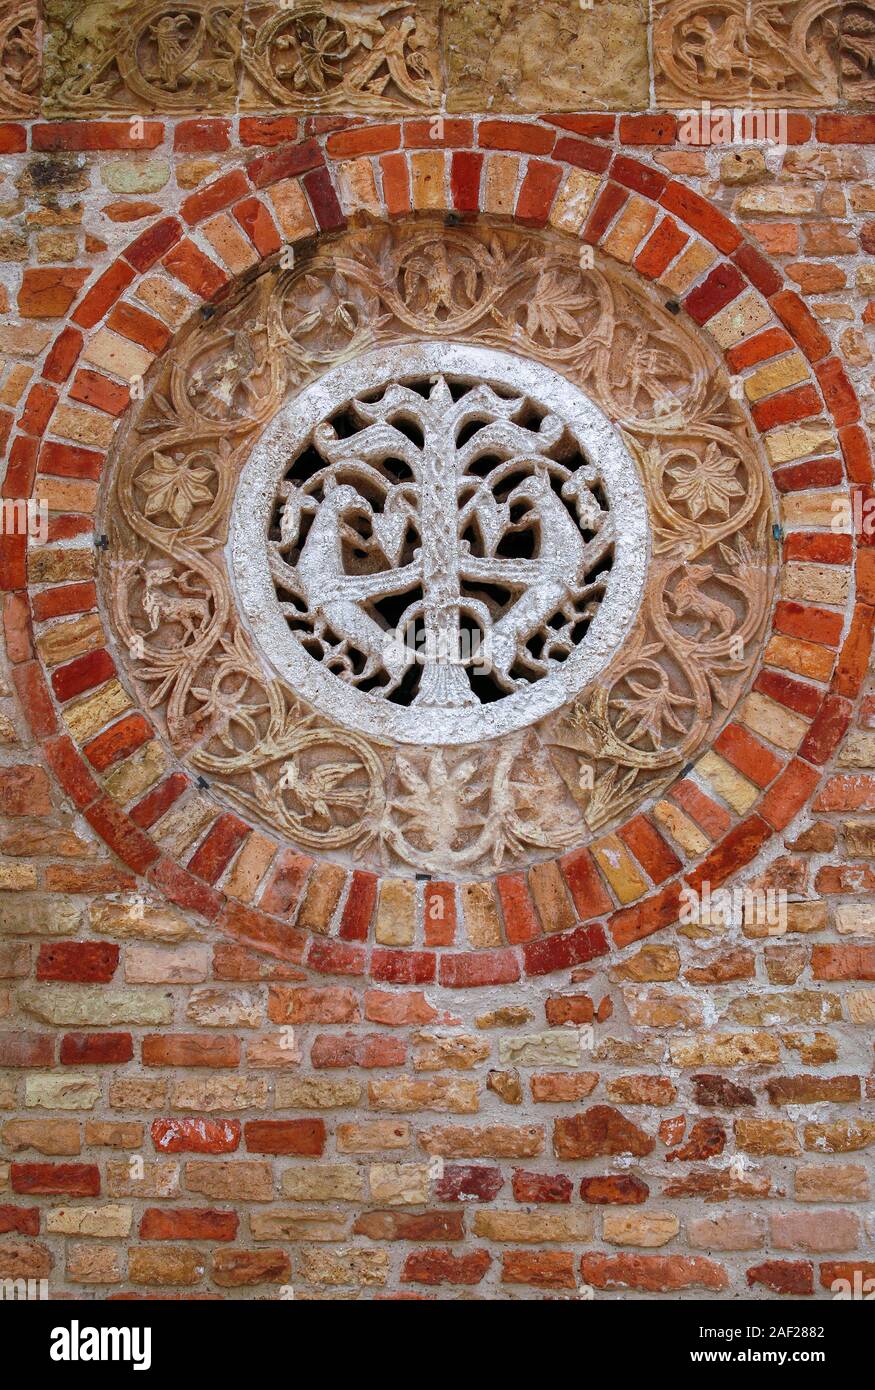 Italien Emilia Romagna Comacchio, Pomposa Abtei - Symbolik und externe Details Stockfoto